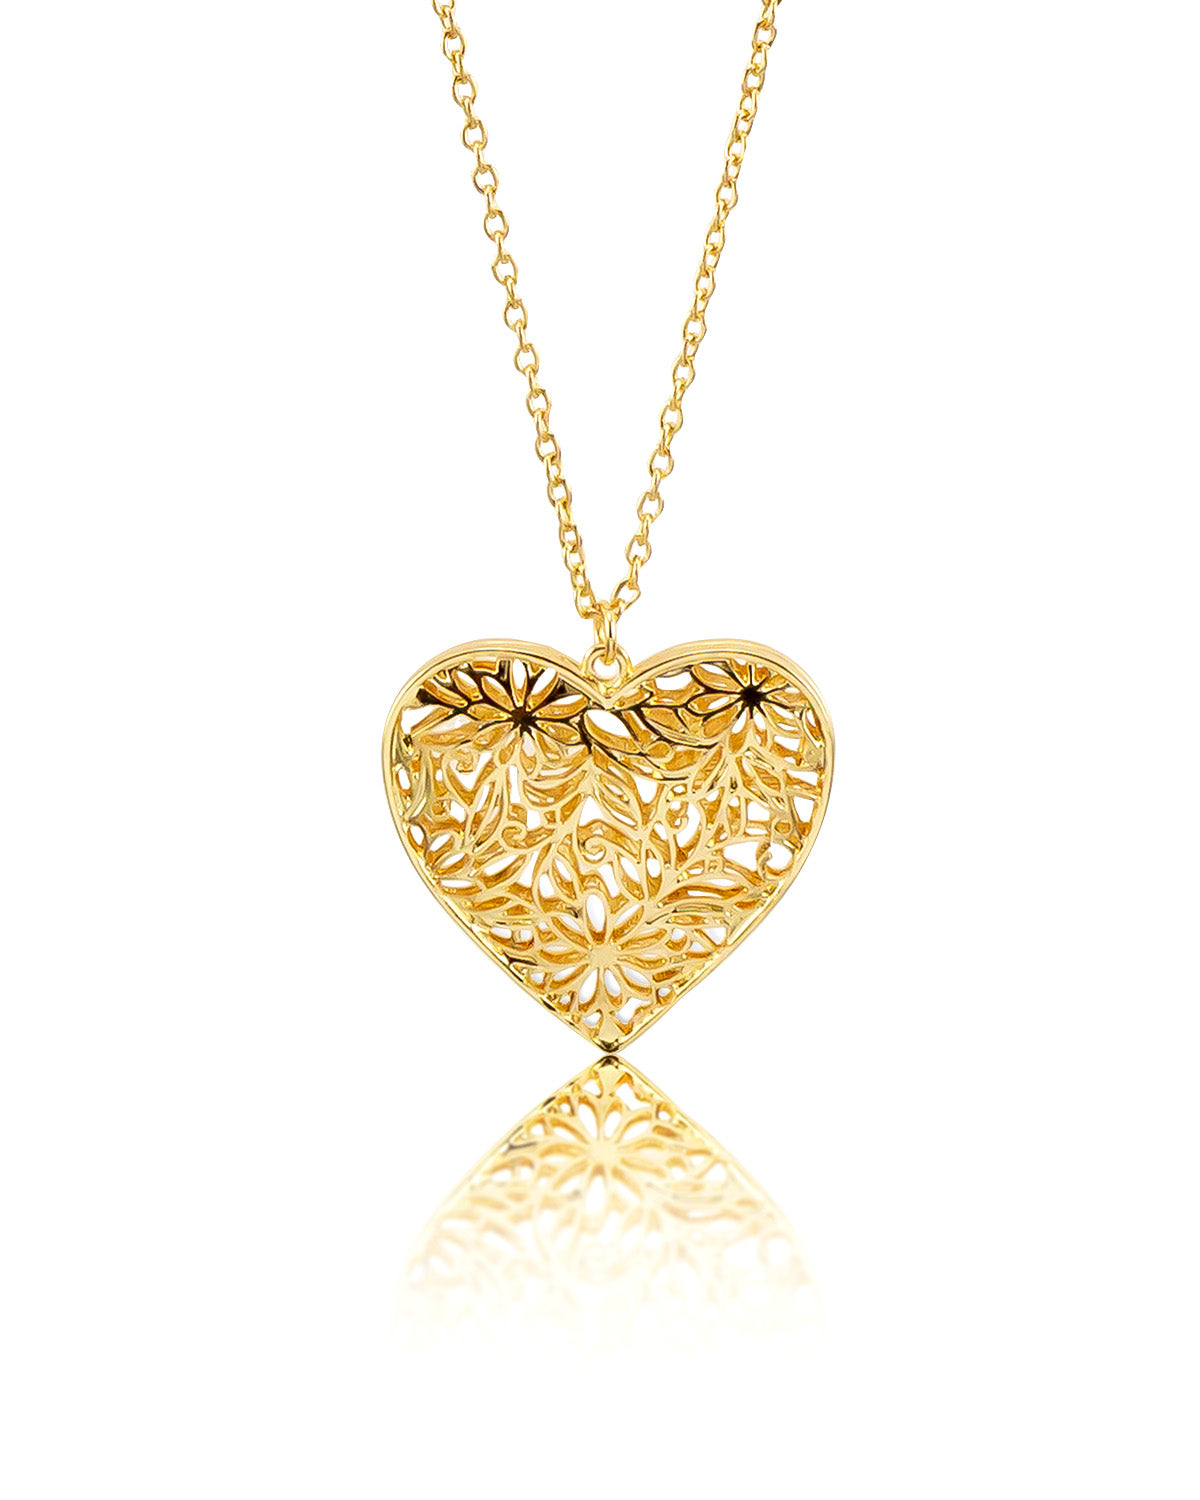 Dauplaise Jewelry - 'Be Mine' Filigree Heart Pendant